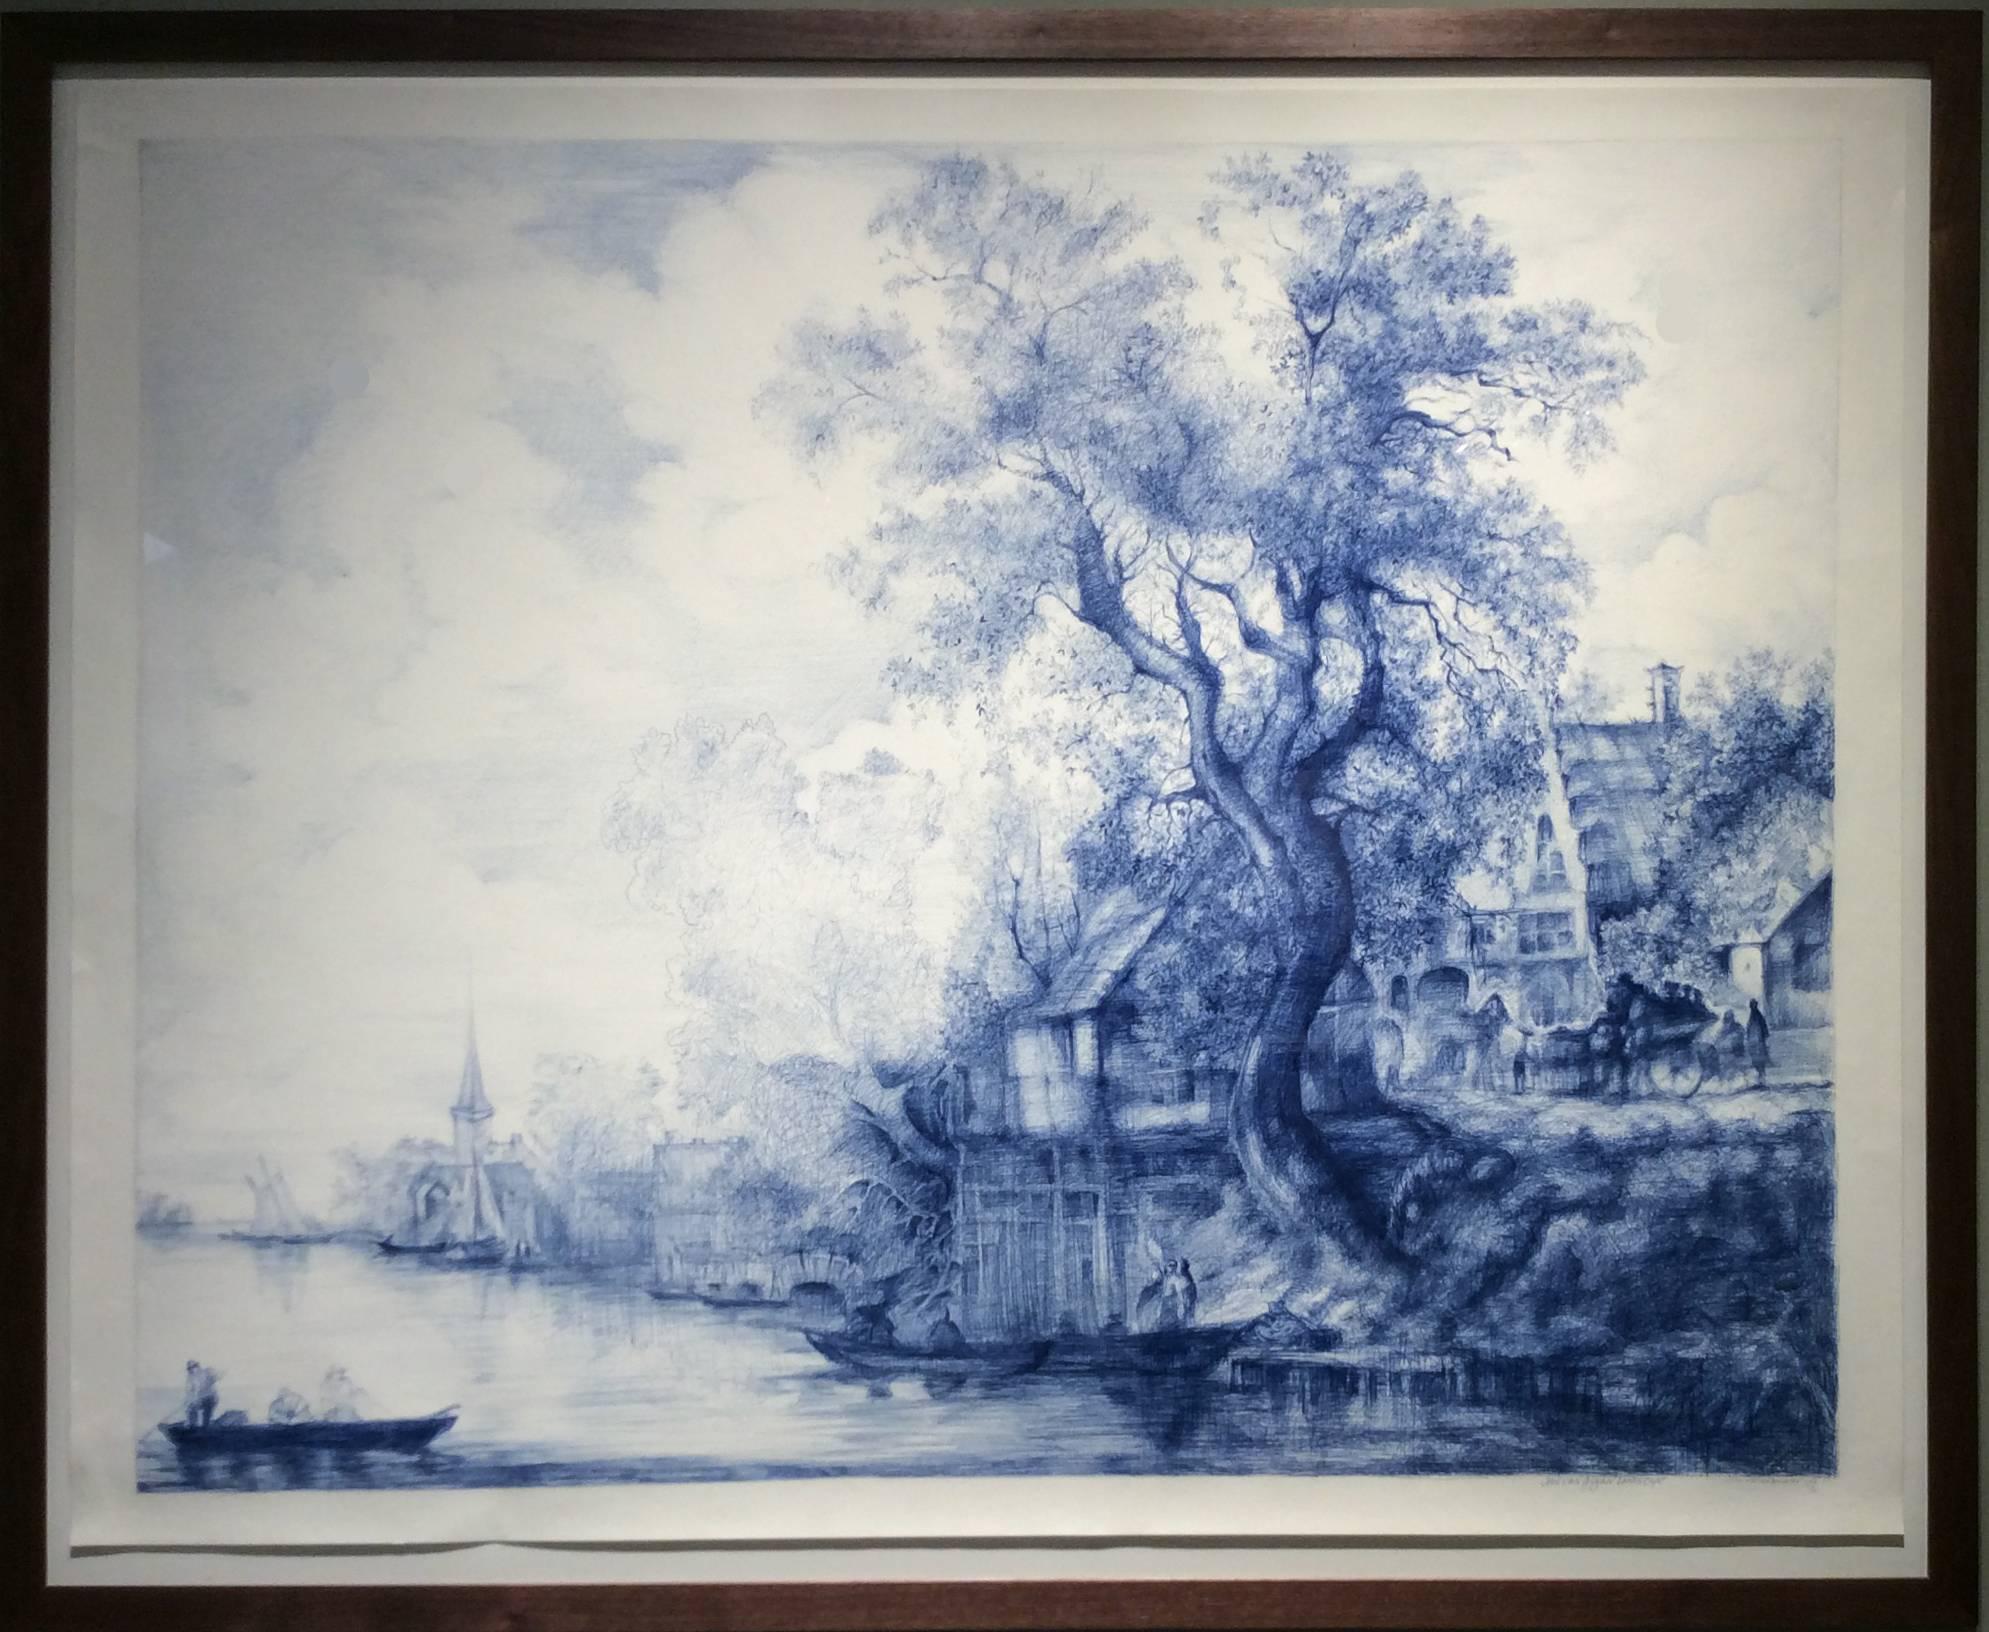 Jan Van Goyen (Baroque Ballpoint pen landscape drawing on paper in Blue ink) - Art by Linda Newman Boughton